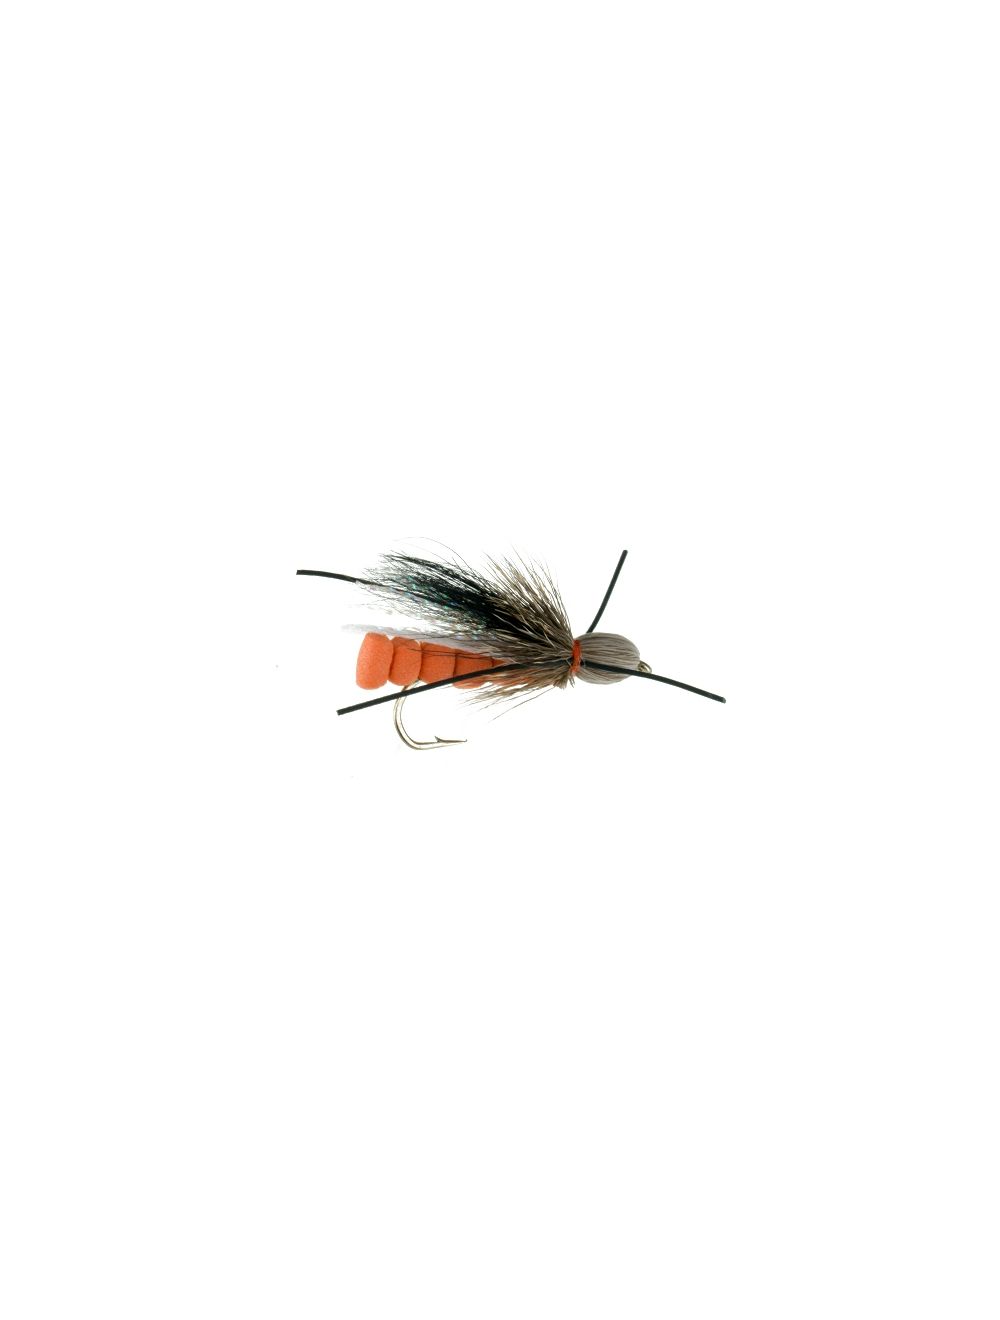 https://eadn-wc02-1020161.nxedge.io/cdn/media/catalog/product/cache/32b930e20bfef0c9badd7ee253a86131/f/o/foam-bullet-head-salmonfly-fly-fishing-flies-dry-flies_1.jpg